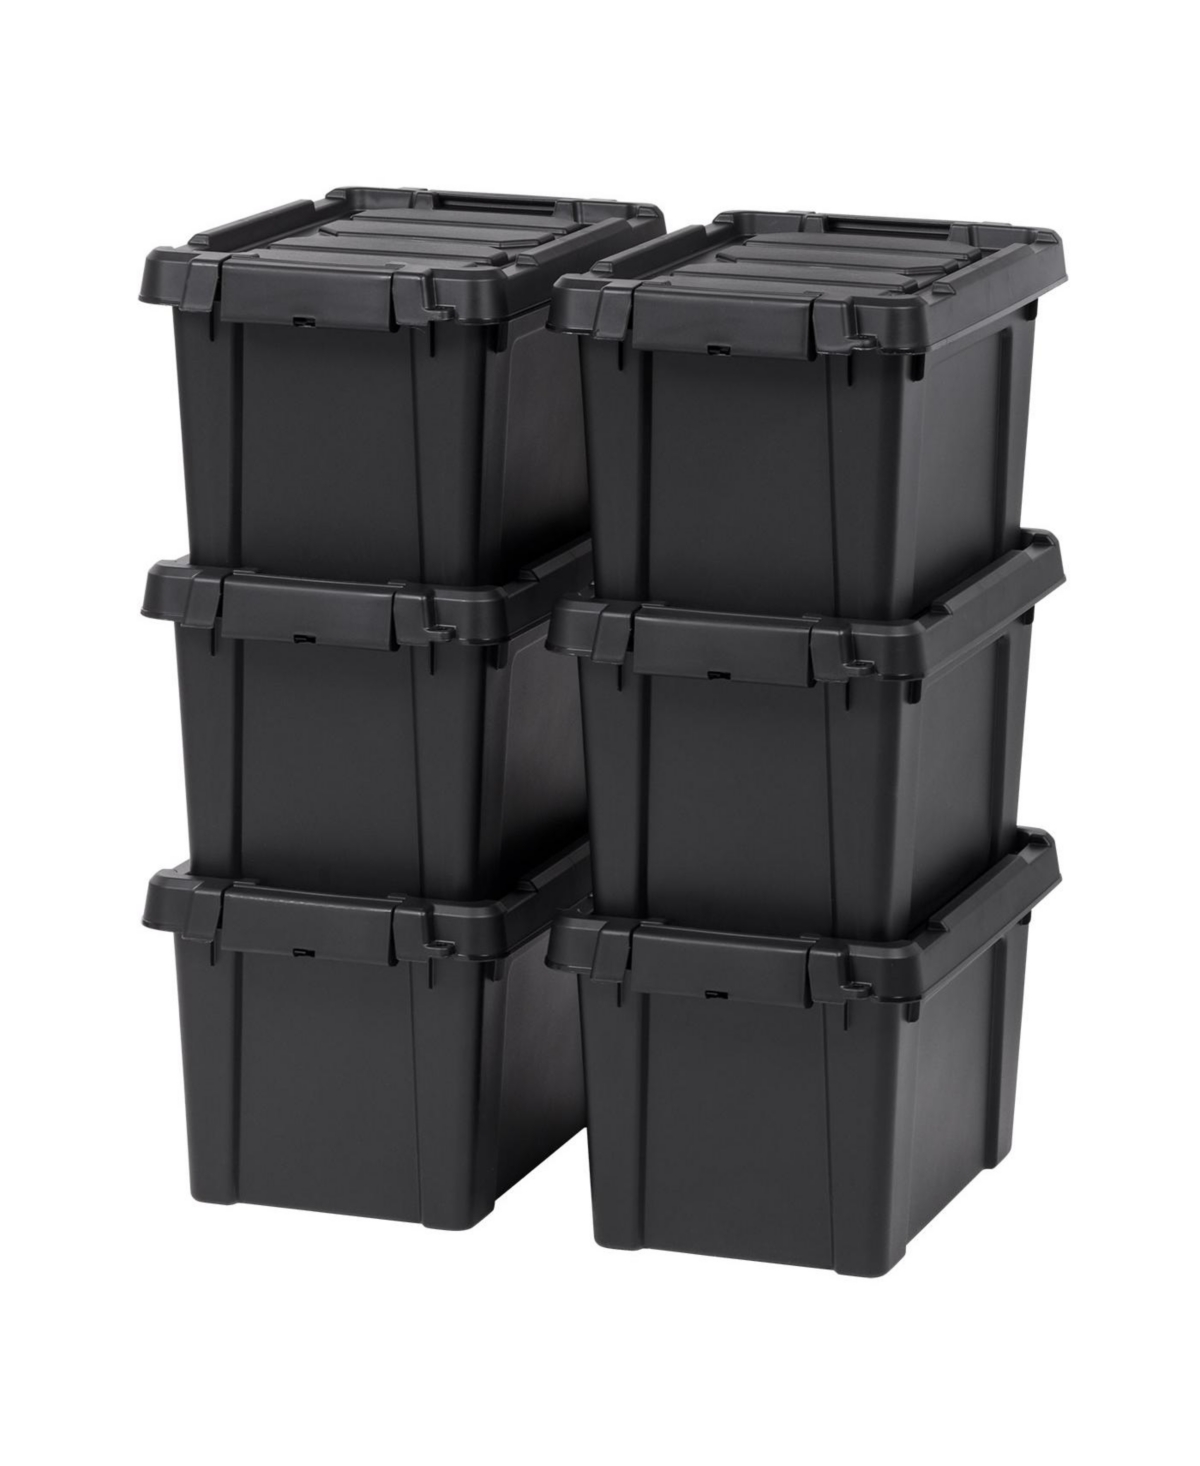 6 Pack 5gal/20qt Heavy-Duty Storage Plastic Bin Tote Container, Black - Black